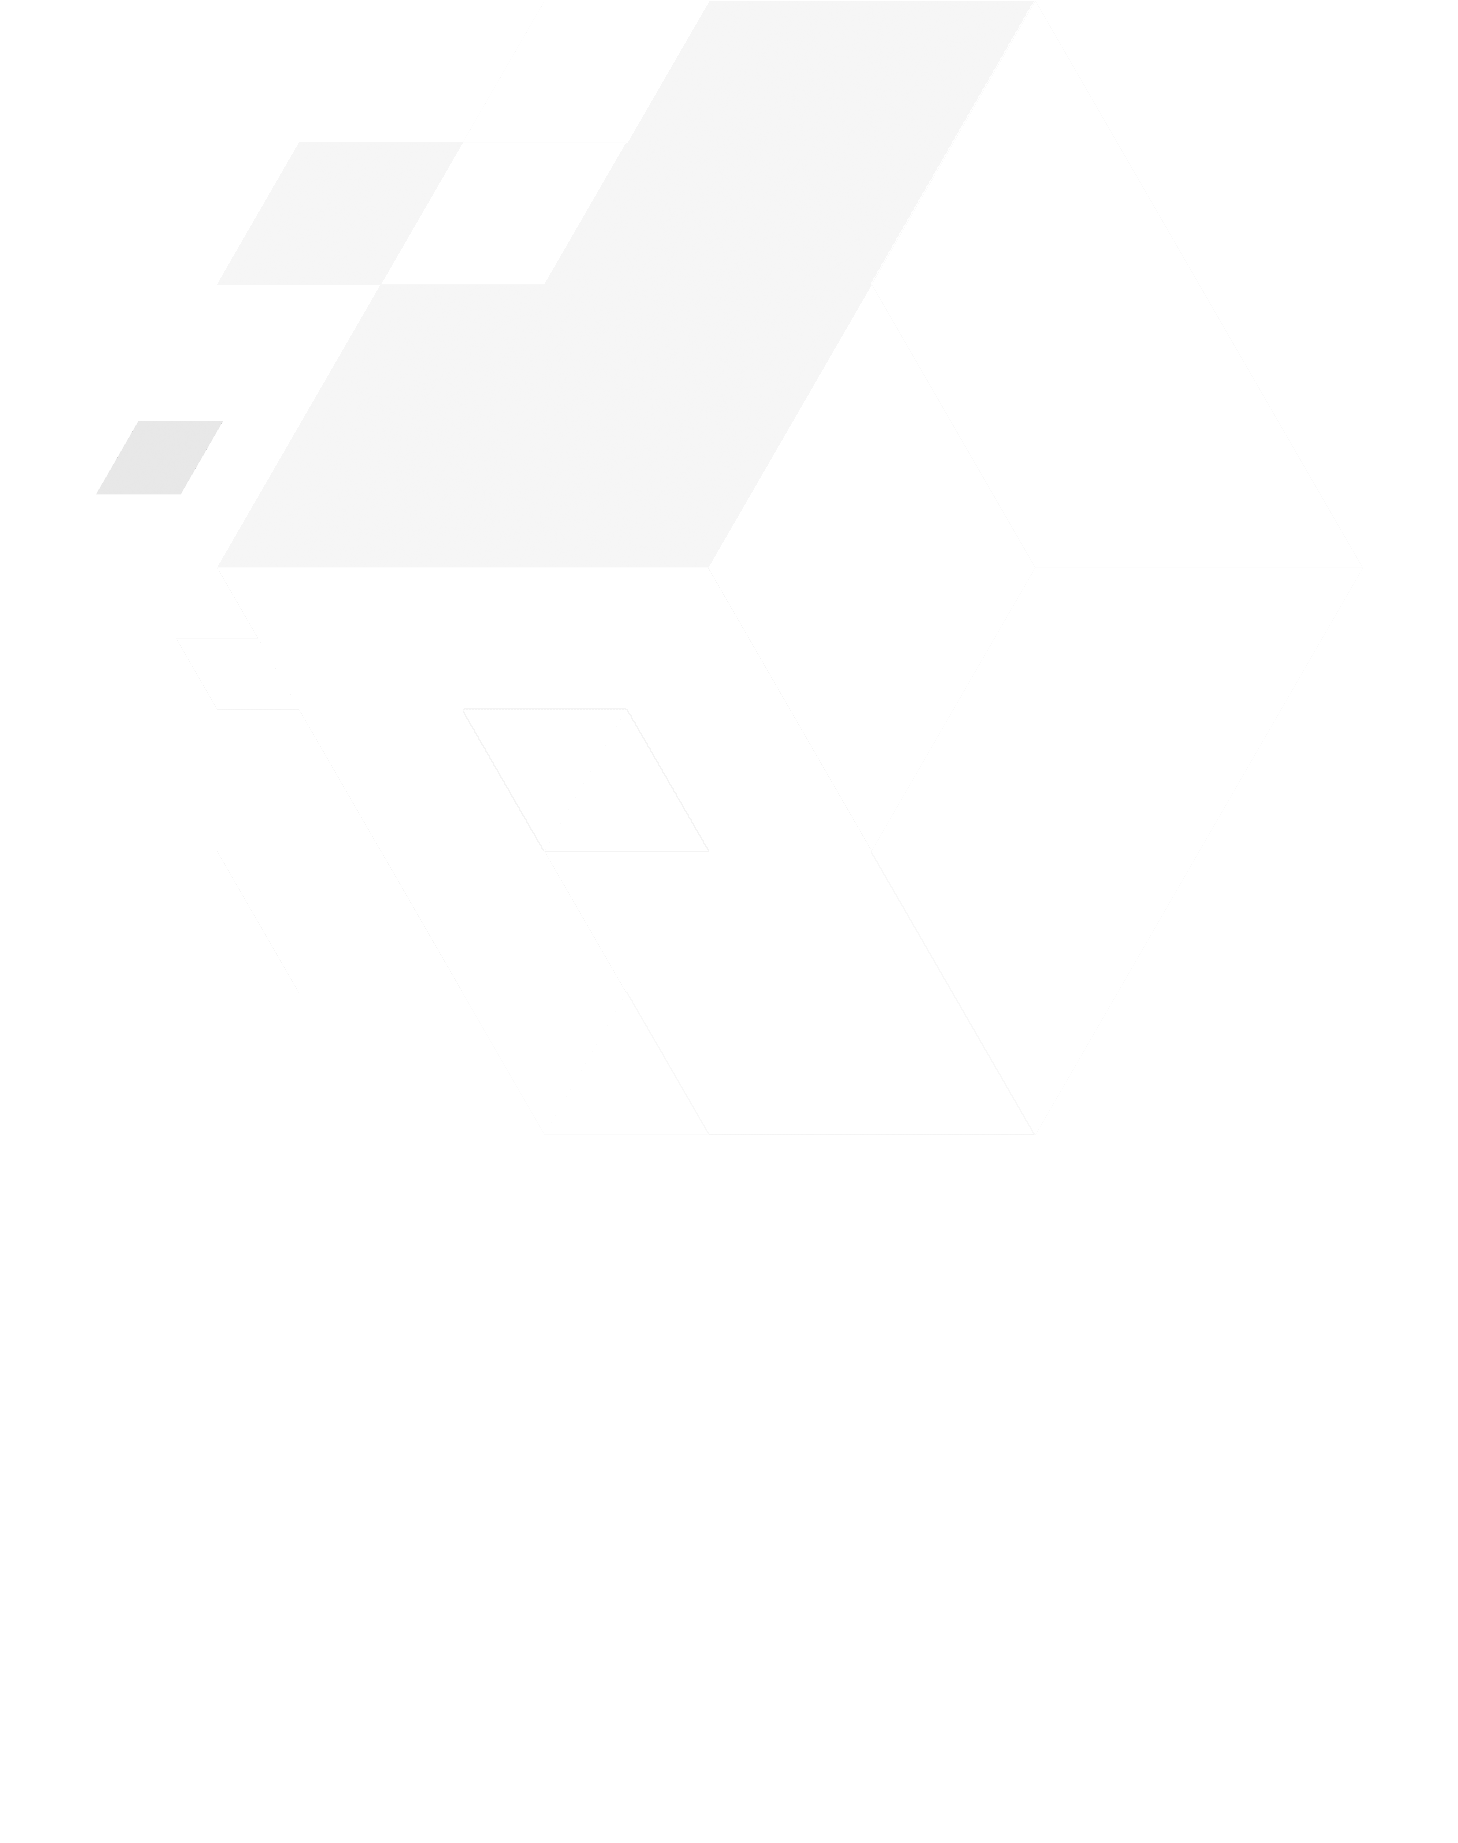 UnBoxRobotics